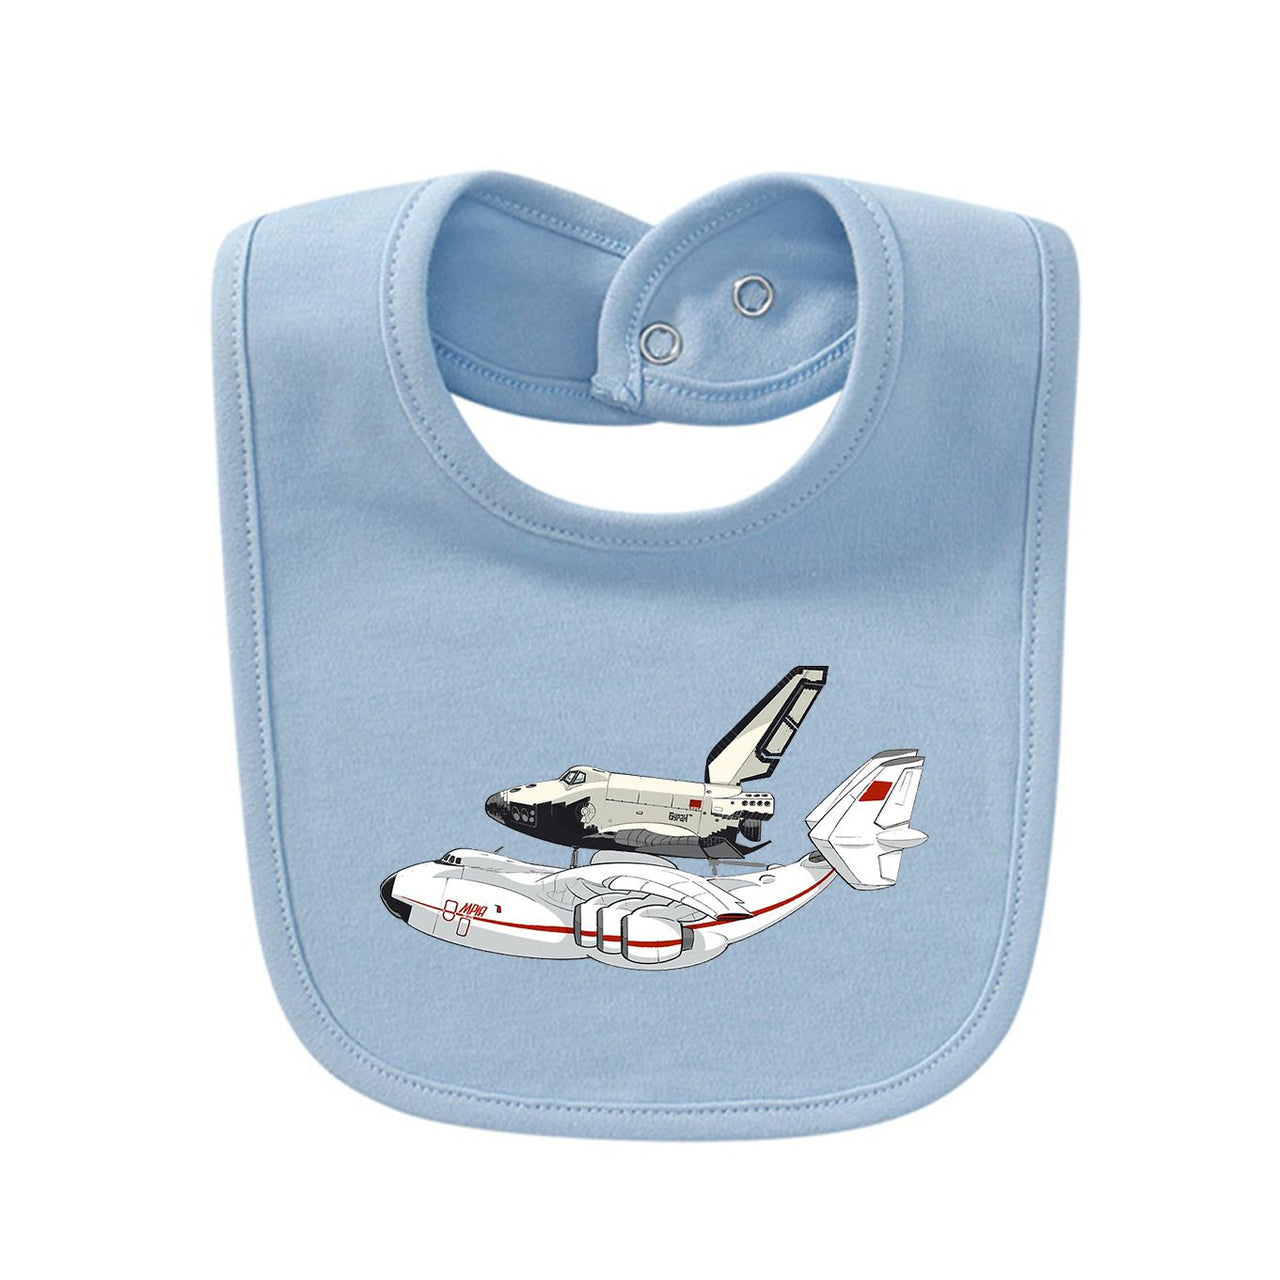 Buran & An-225 Designed Baby Saliva & Feeding Towels